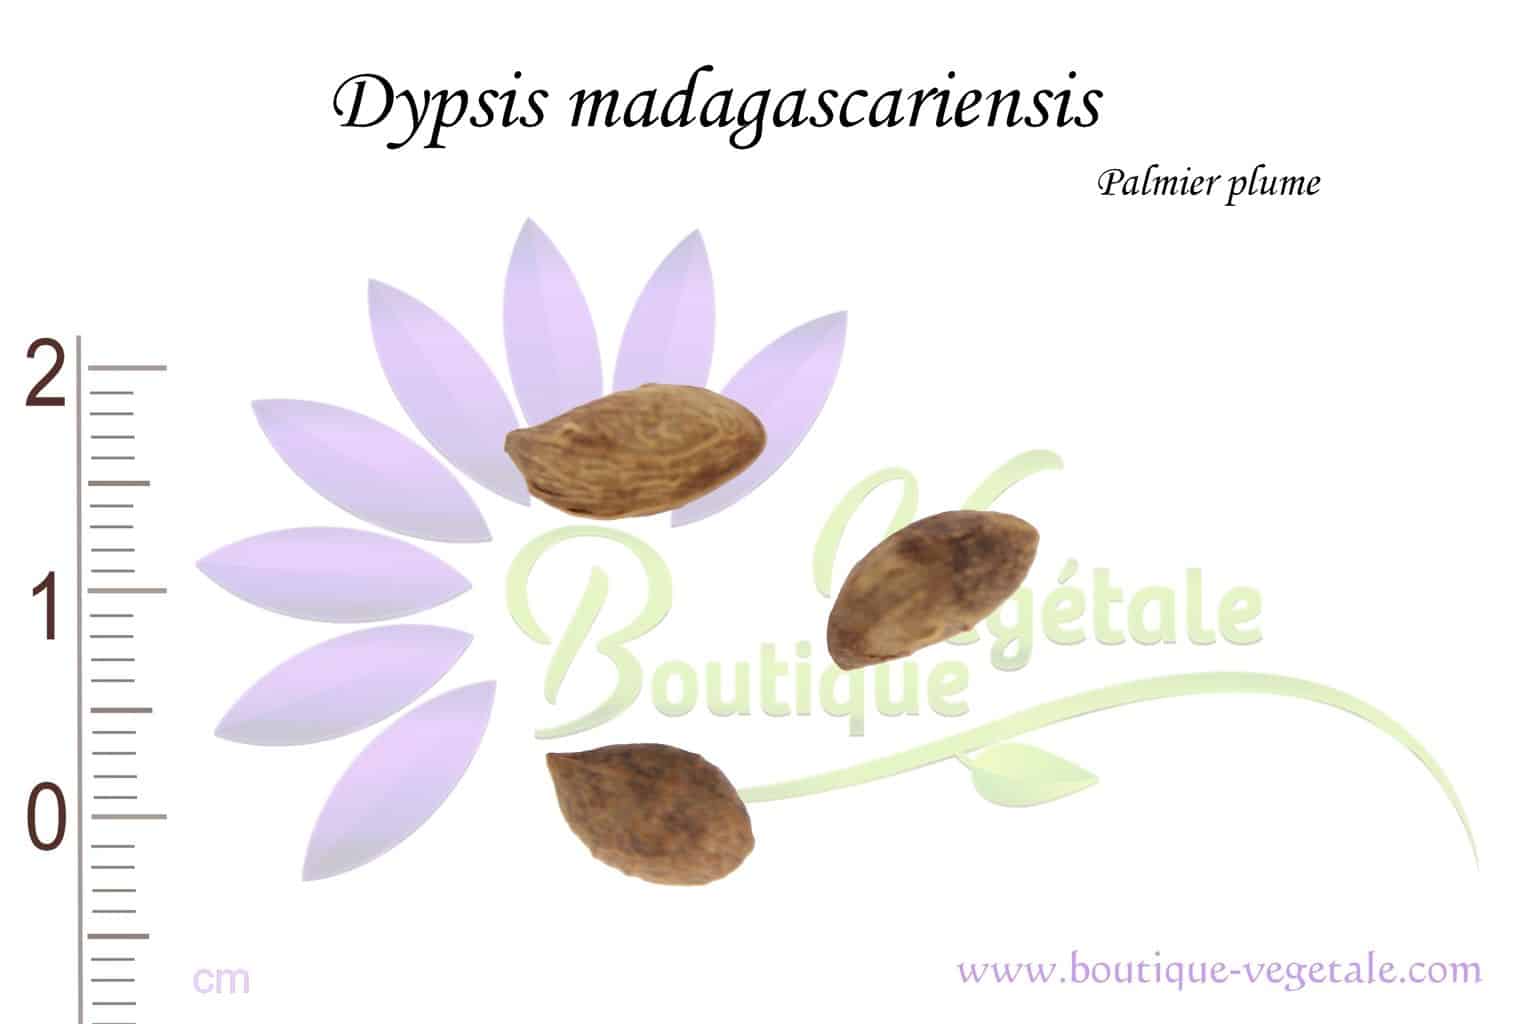 Graines de Dypsis madagascariensis, Semences de Dypsis madagascariensis ou Palmier plume